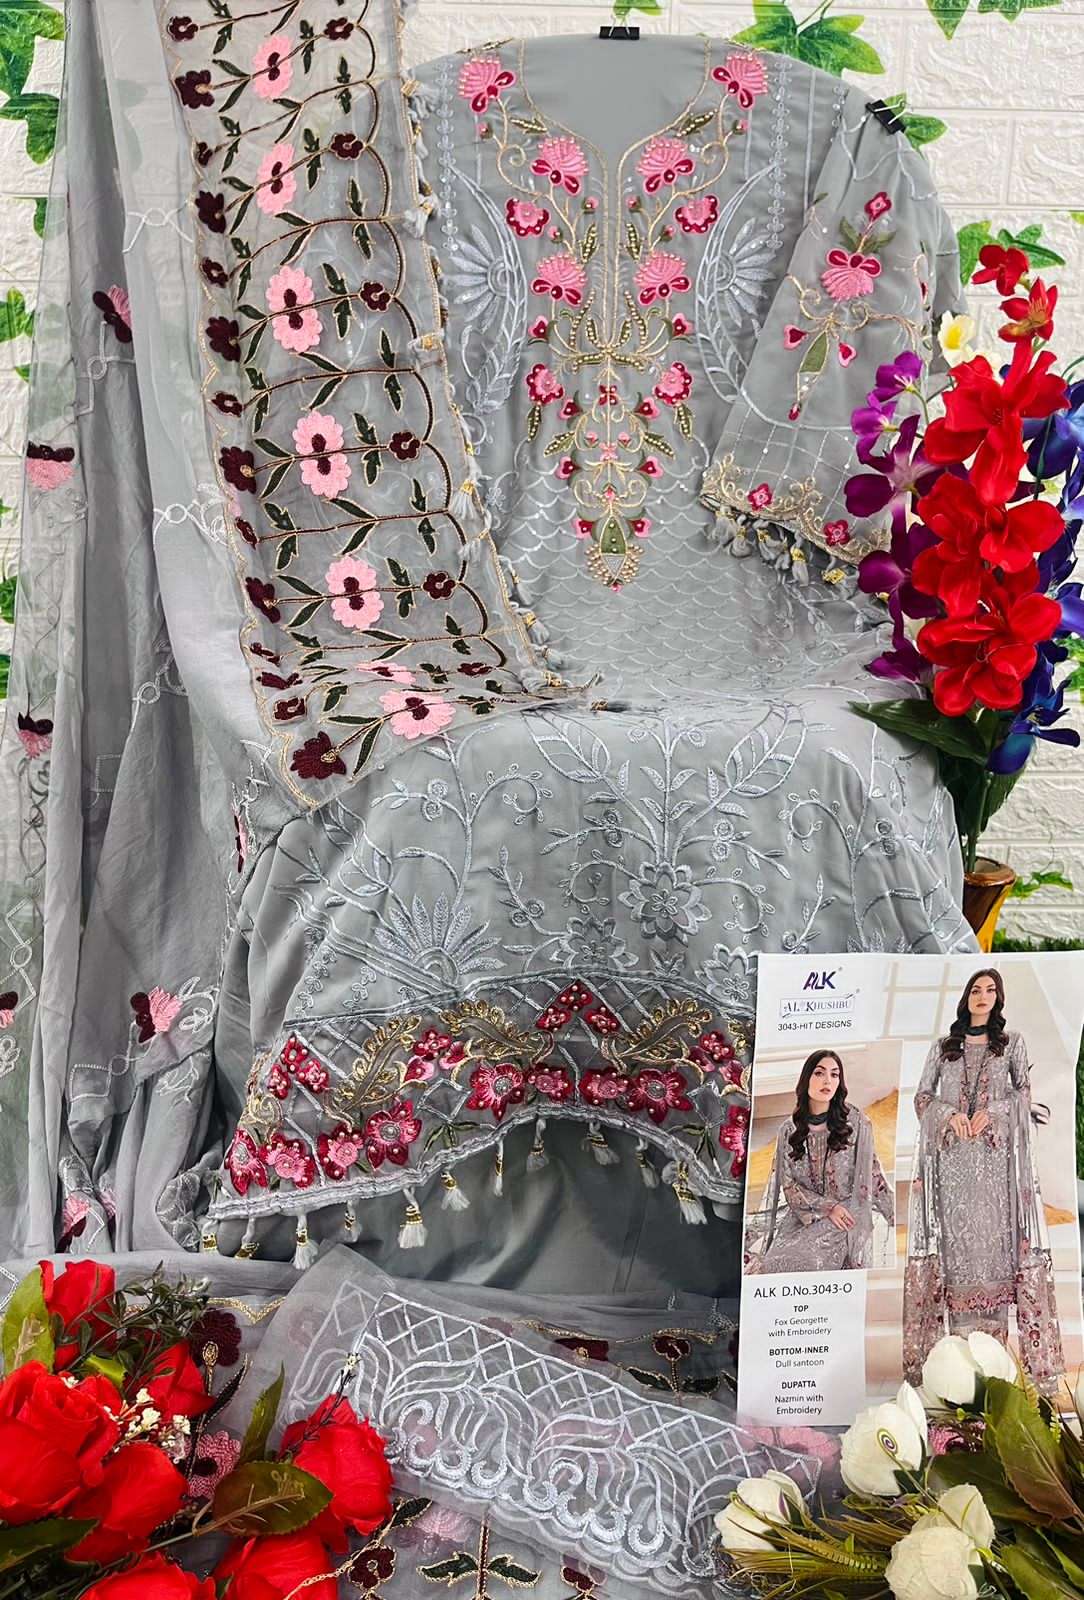 al khushbu 3043 hit designs fancy look designer pakistani salwar suits online dealer surat 